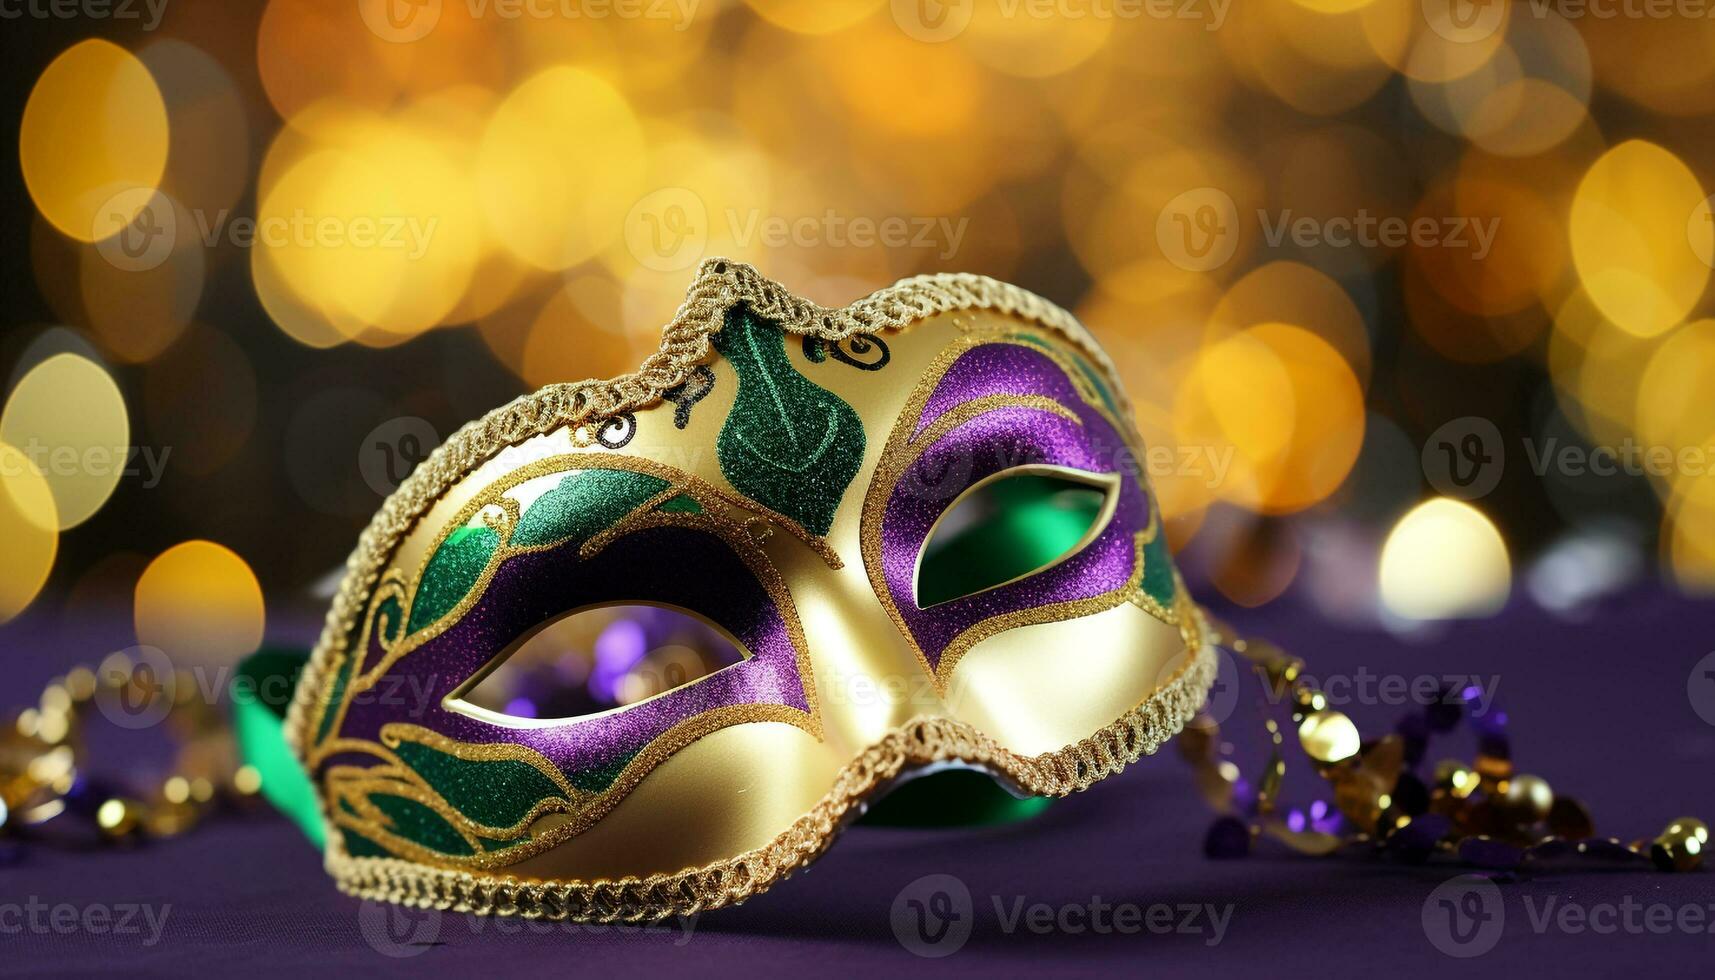 AI generated Shiny gold costume masks illuminate Mardi Gras celebration generated by AI photo